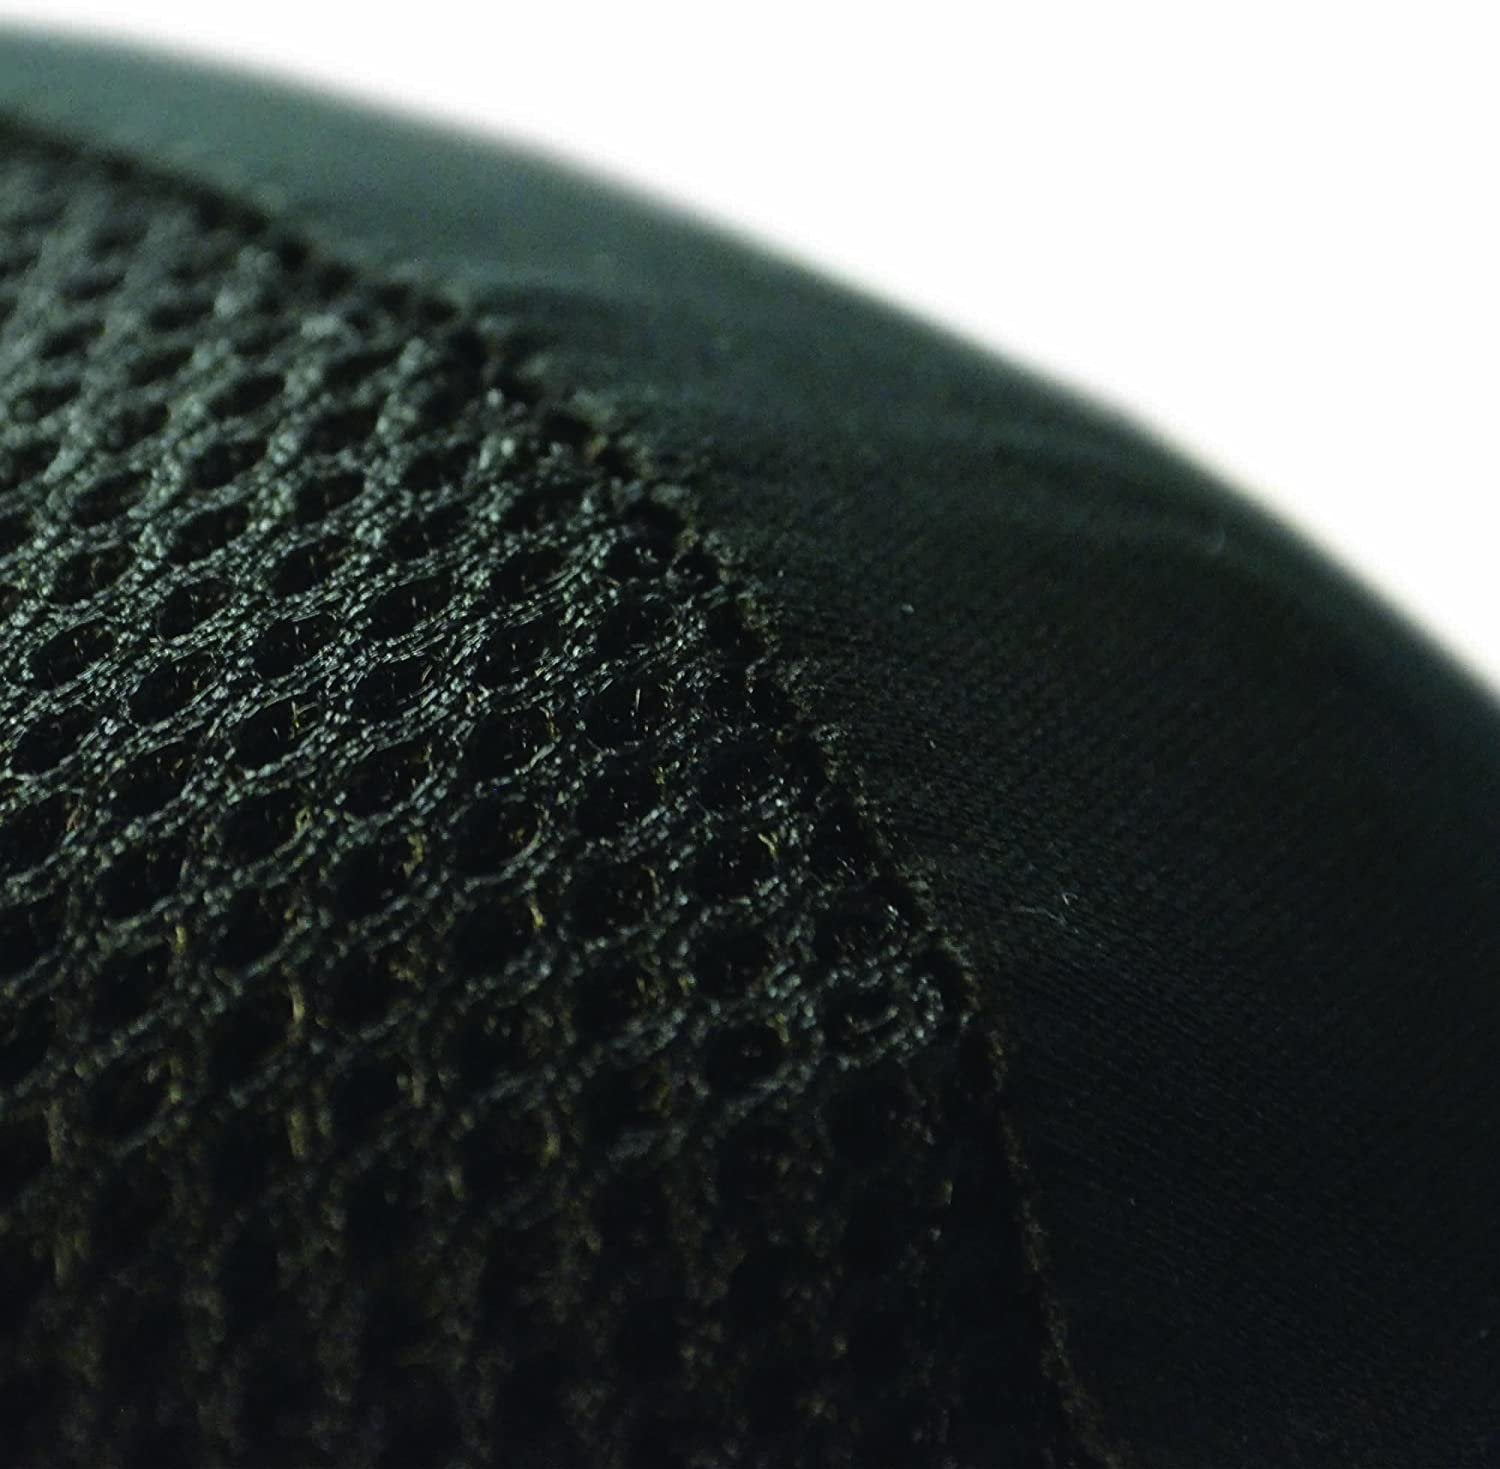 University of North Carolina Tar Heels Pair of Premium Auto Head Rest Covers, Embroidered, Black Elastic, 14x10 Inch